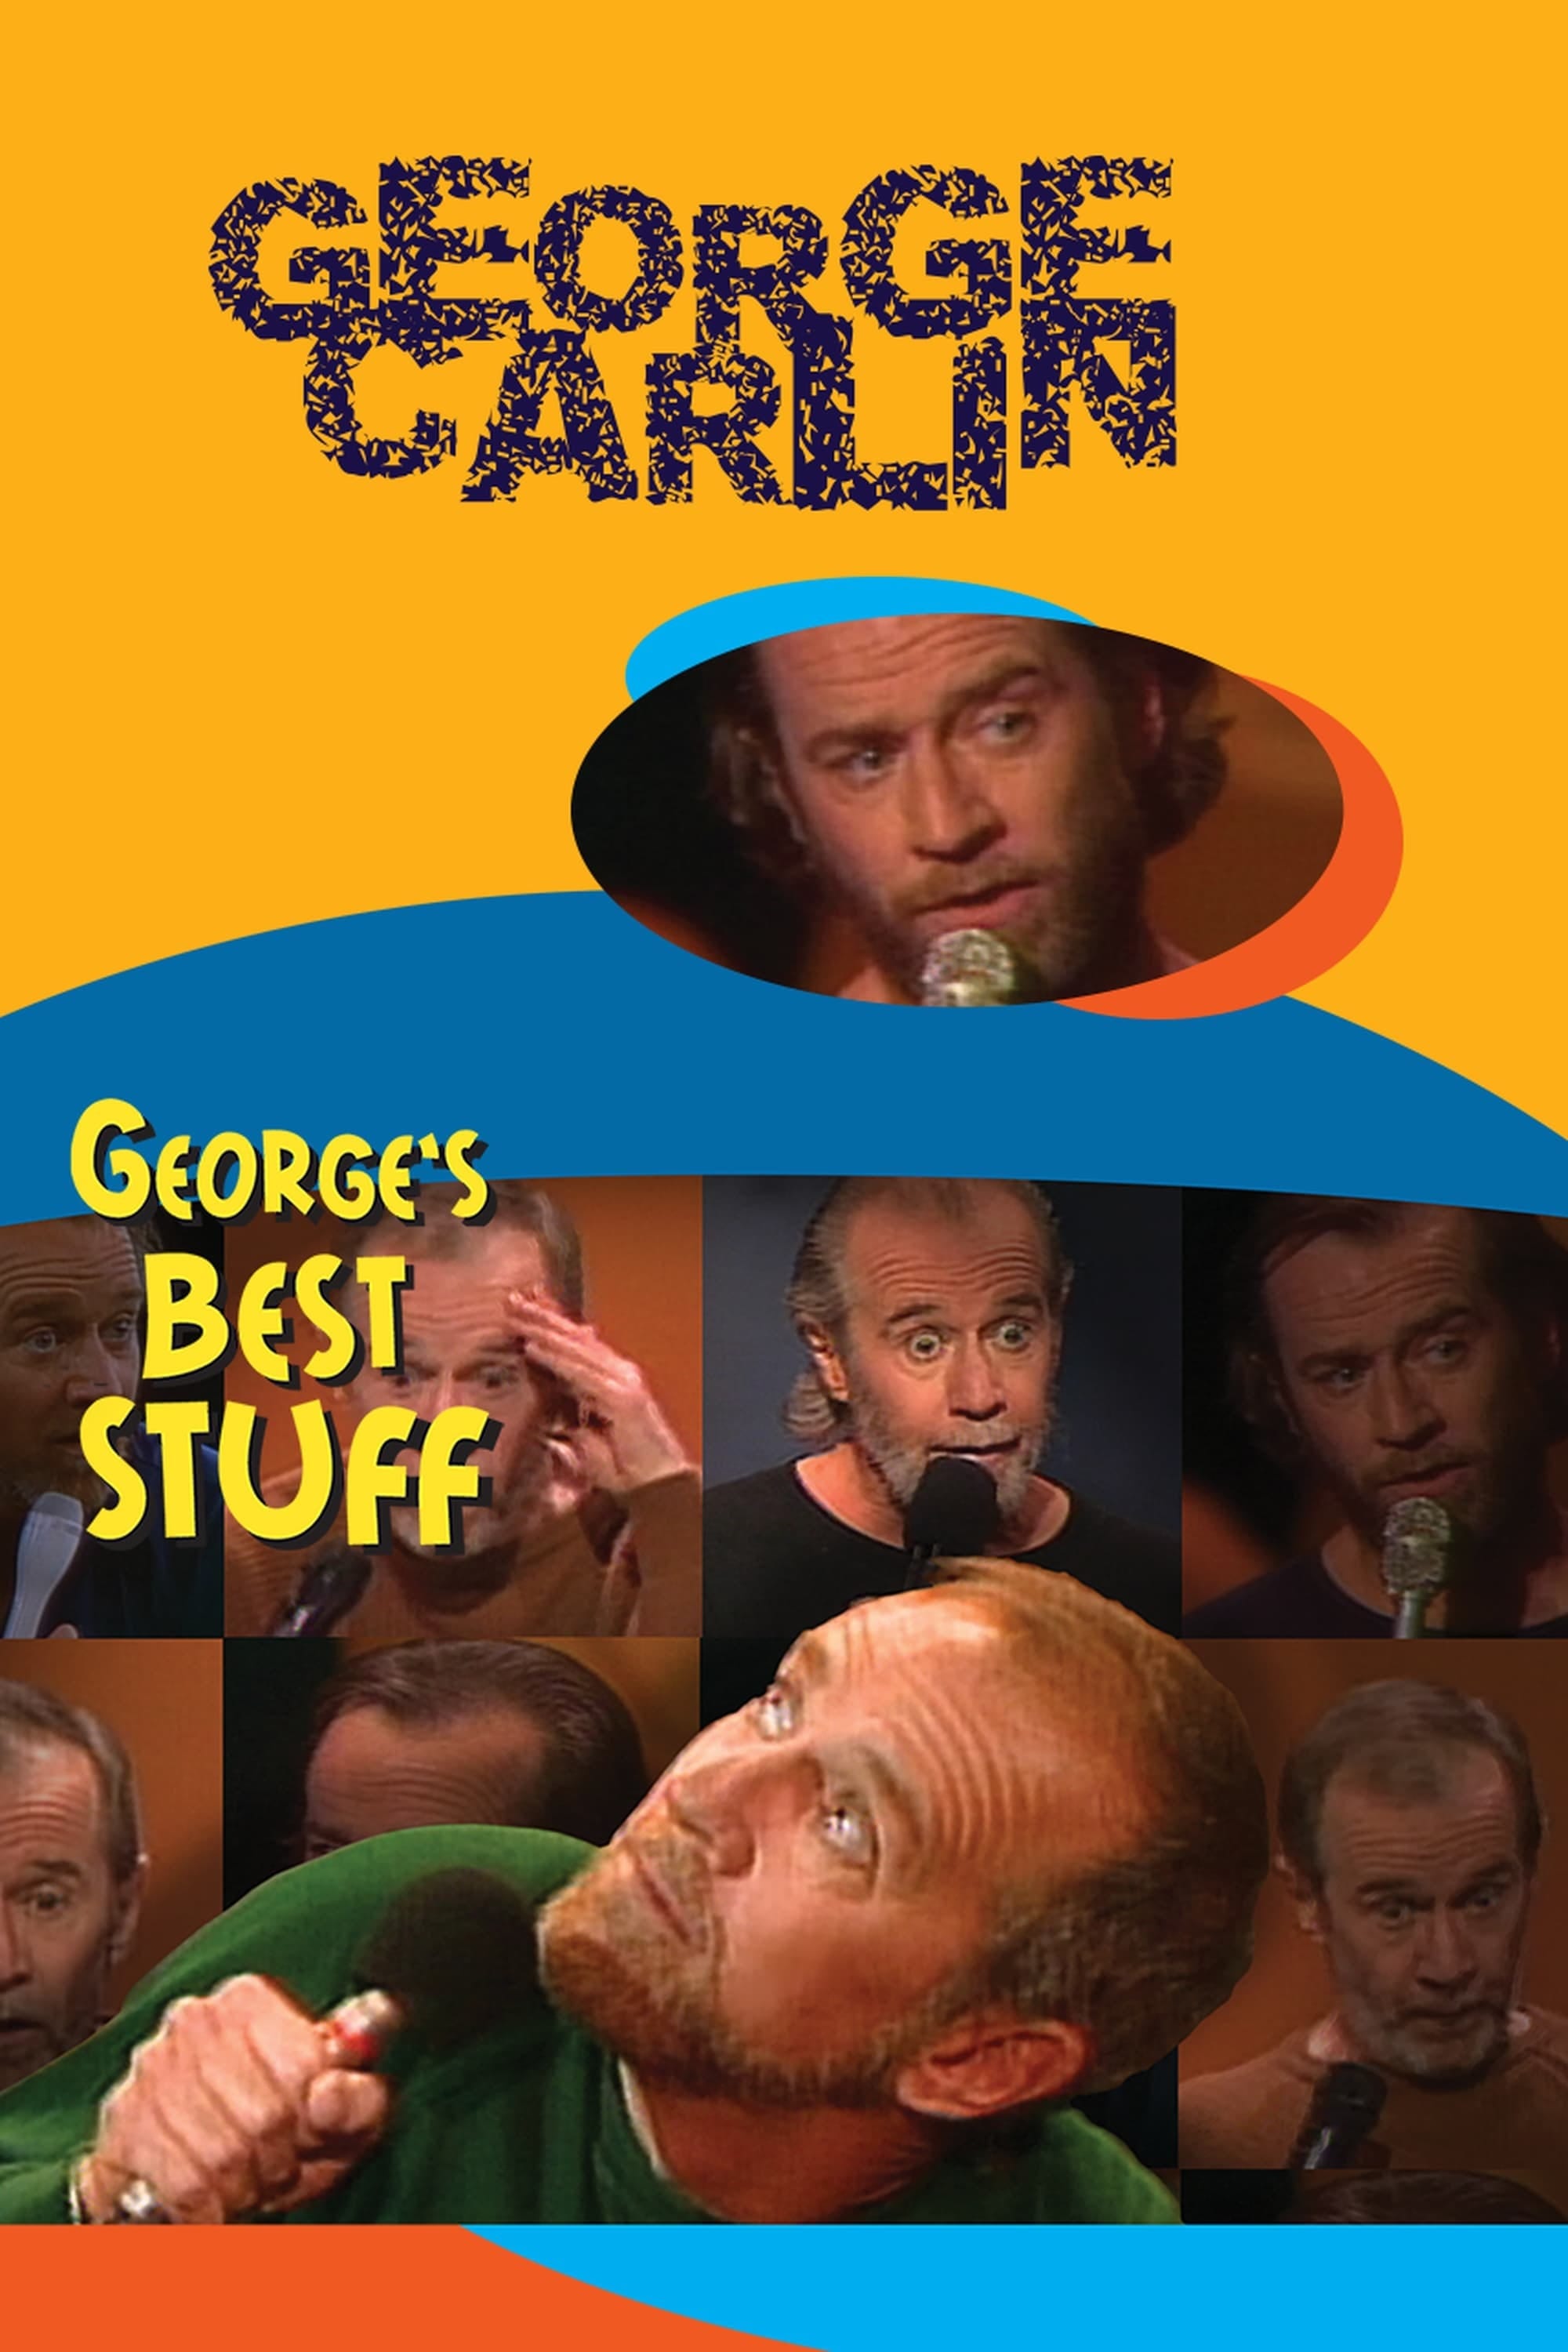 George Carlin: George's Best Stuff (1996)